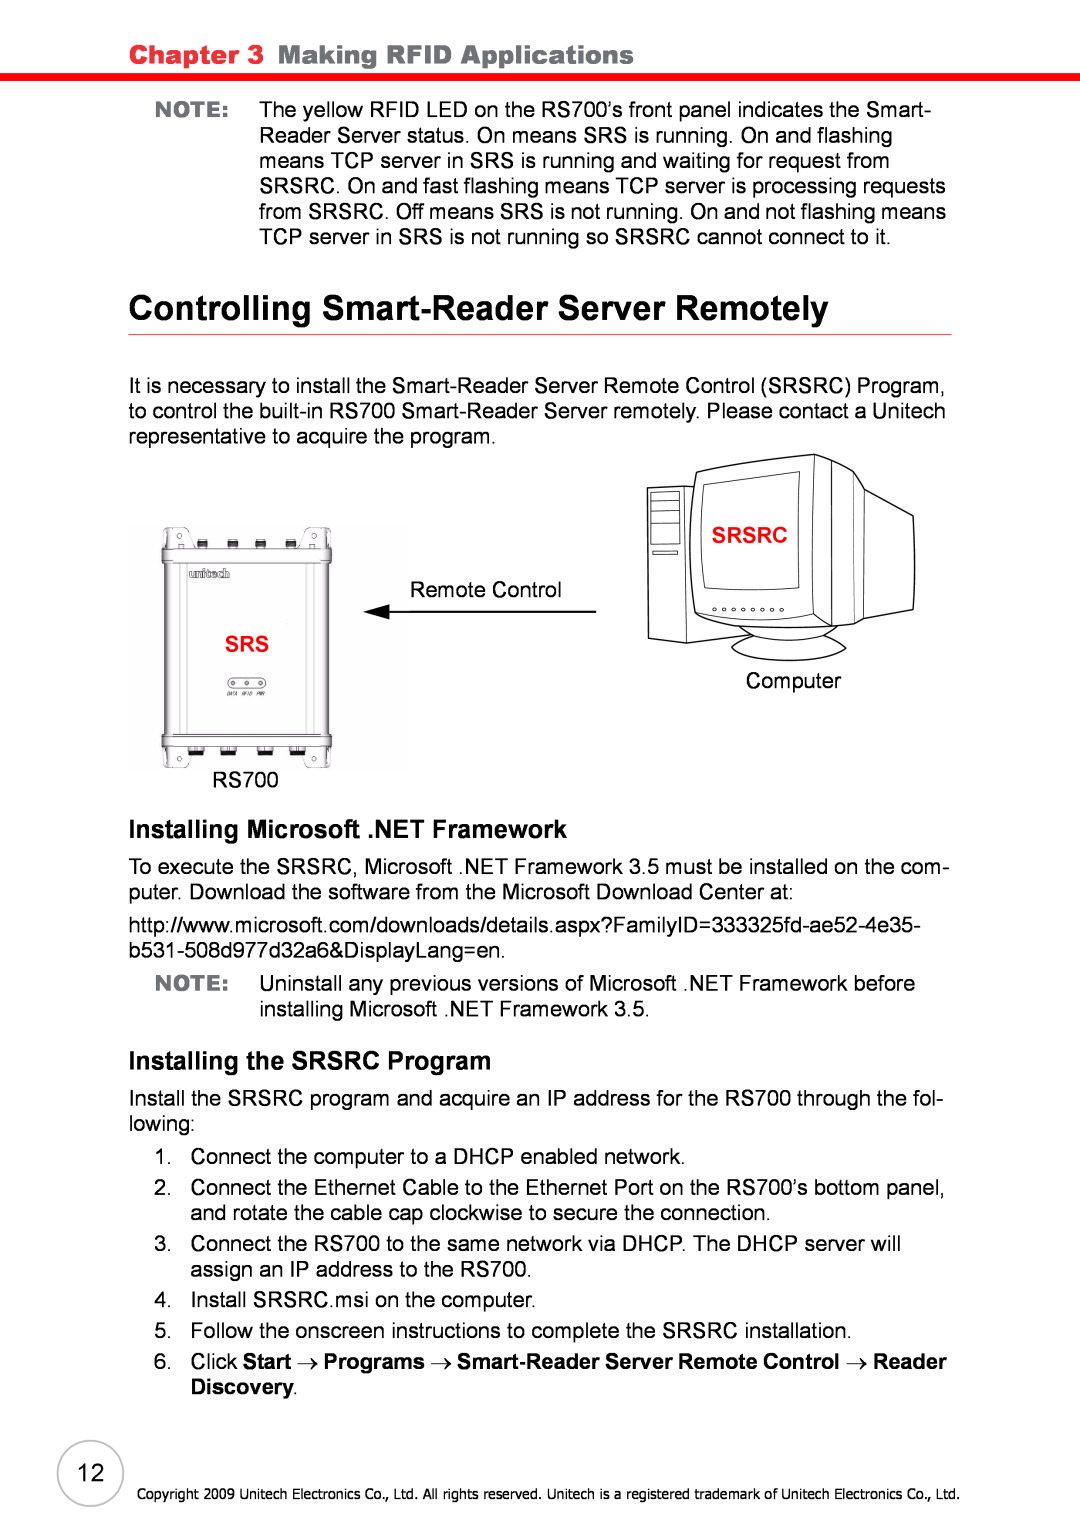 Unitech RS700 Controlling Smart-Reader Server Remotely, Making RFID Applications, Installing Microsoft .NET Framework 